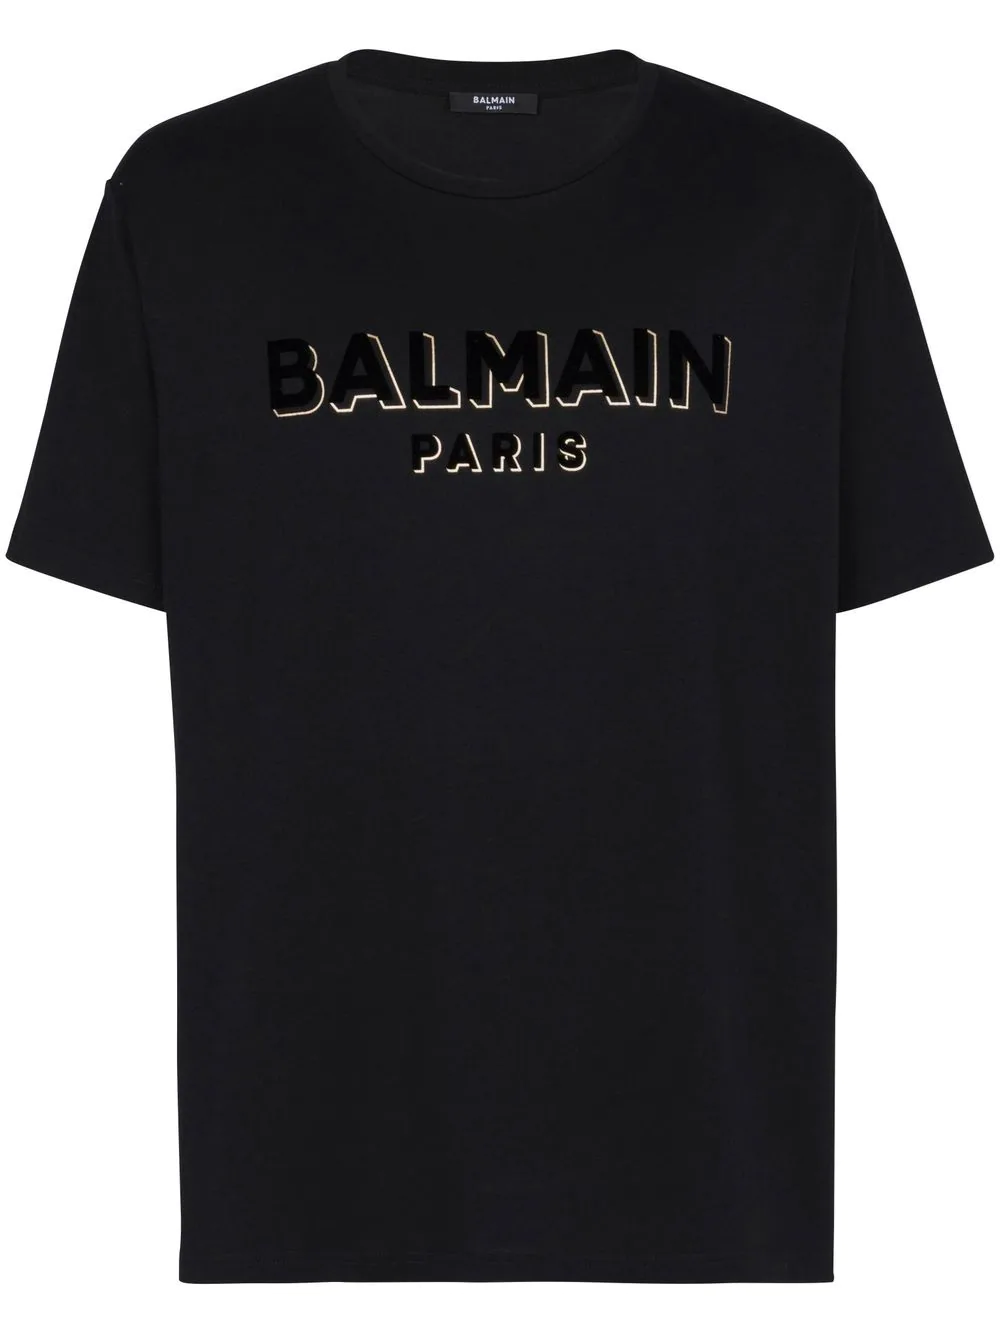 Balmain T-shirt With Application In Black